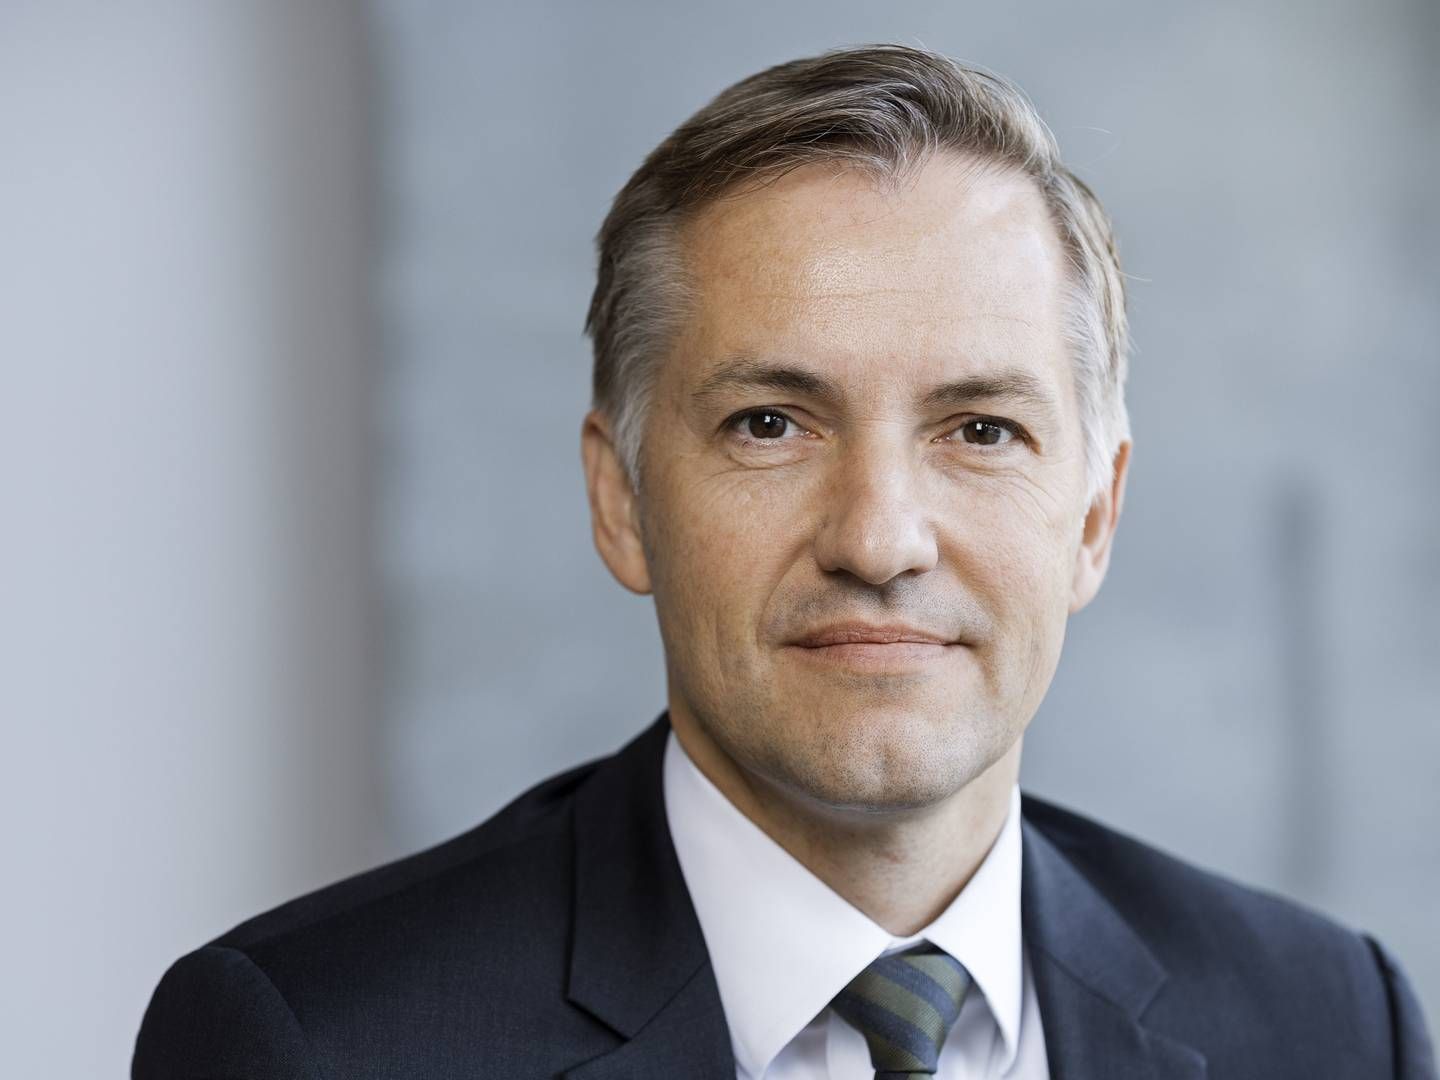 Jacob Tolstrup, executive vice president, Commercial Operations at Lundbeck | Photo: PR / Lundbeck